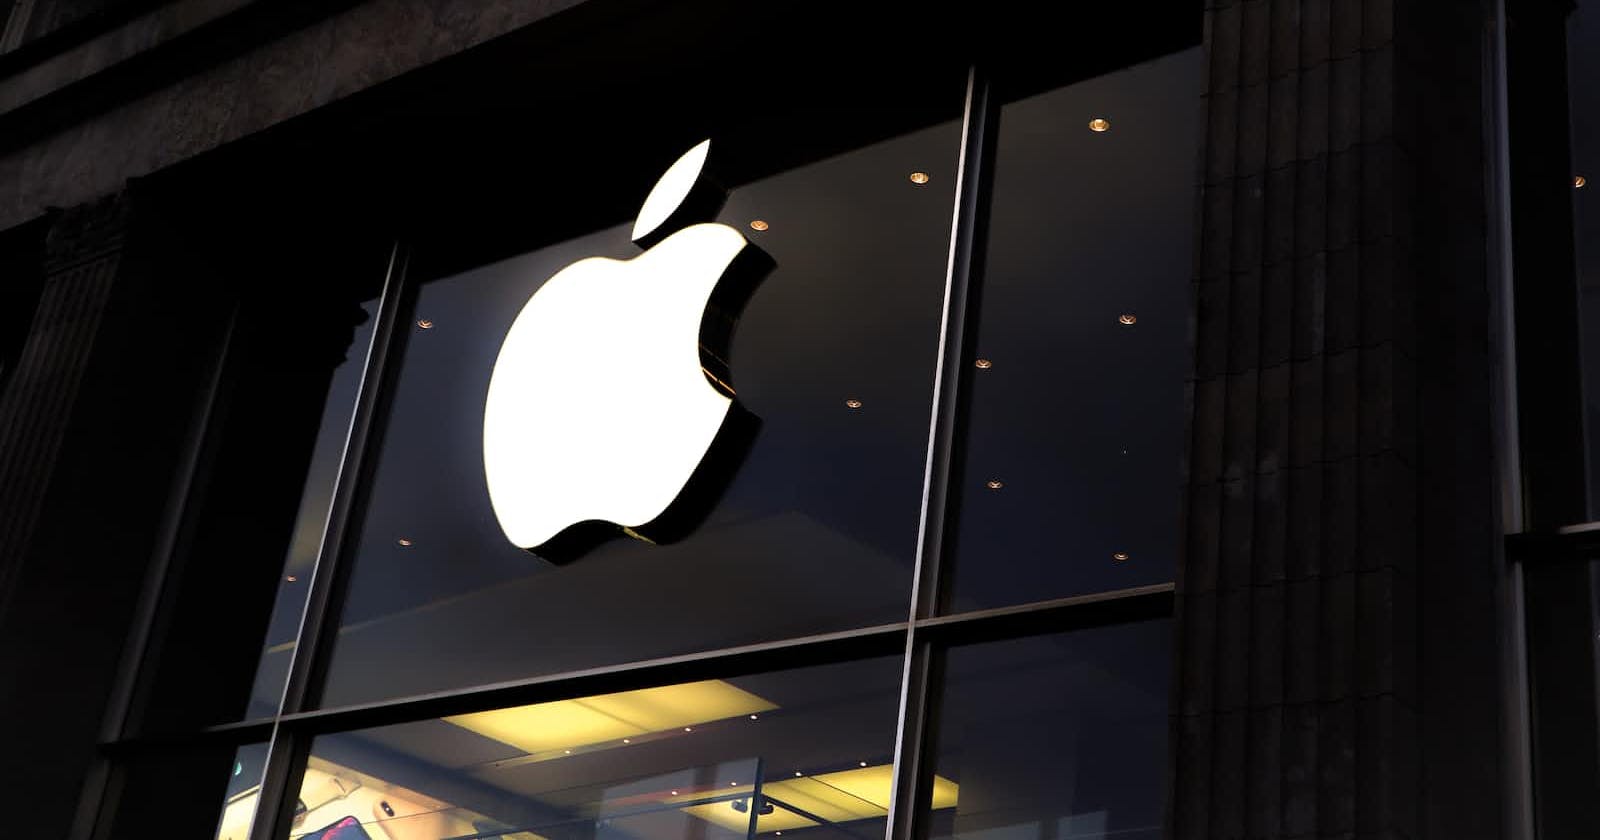 Varadkar Affirms European Adviser's Opinion on Apple Case Won't Affect Ireland's Corporate Tax Regime